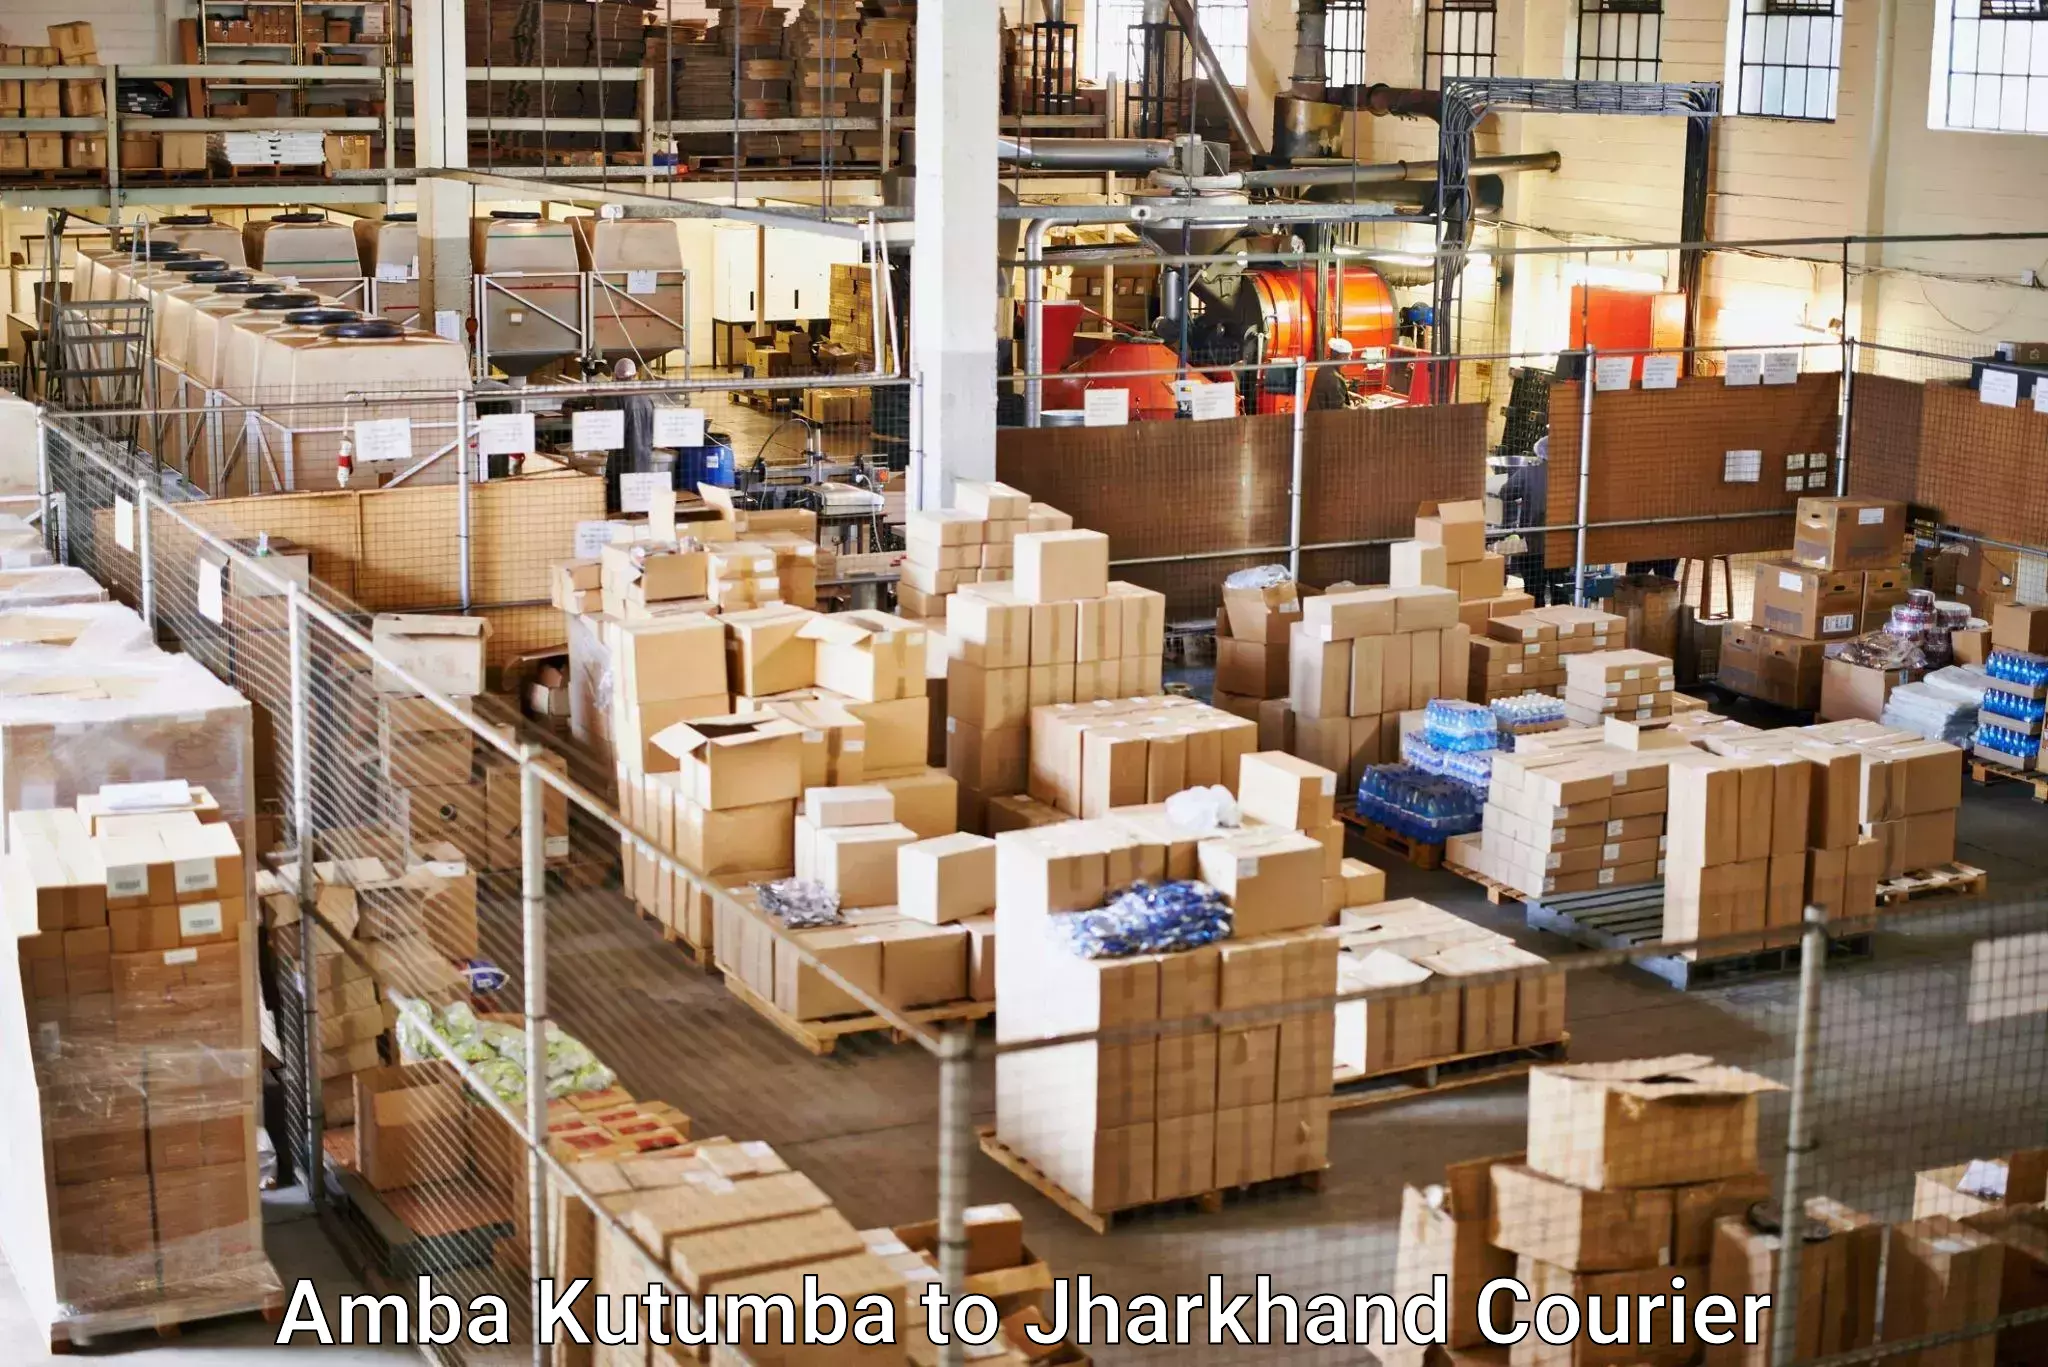 Reliable package handling in Amba Kutumba to Isri